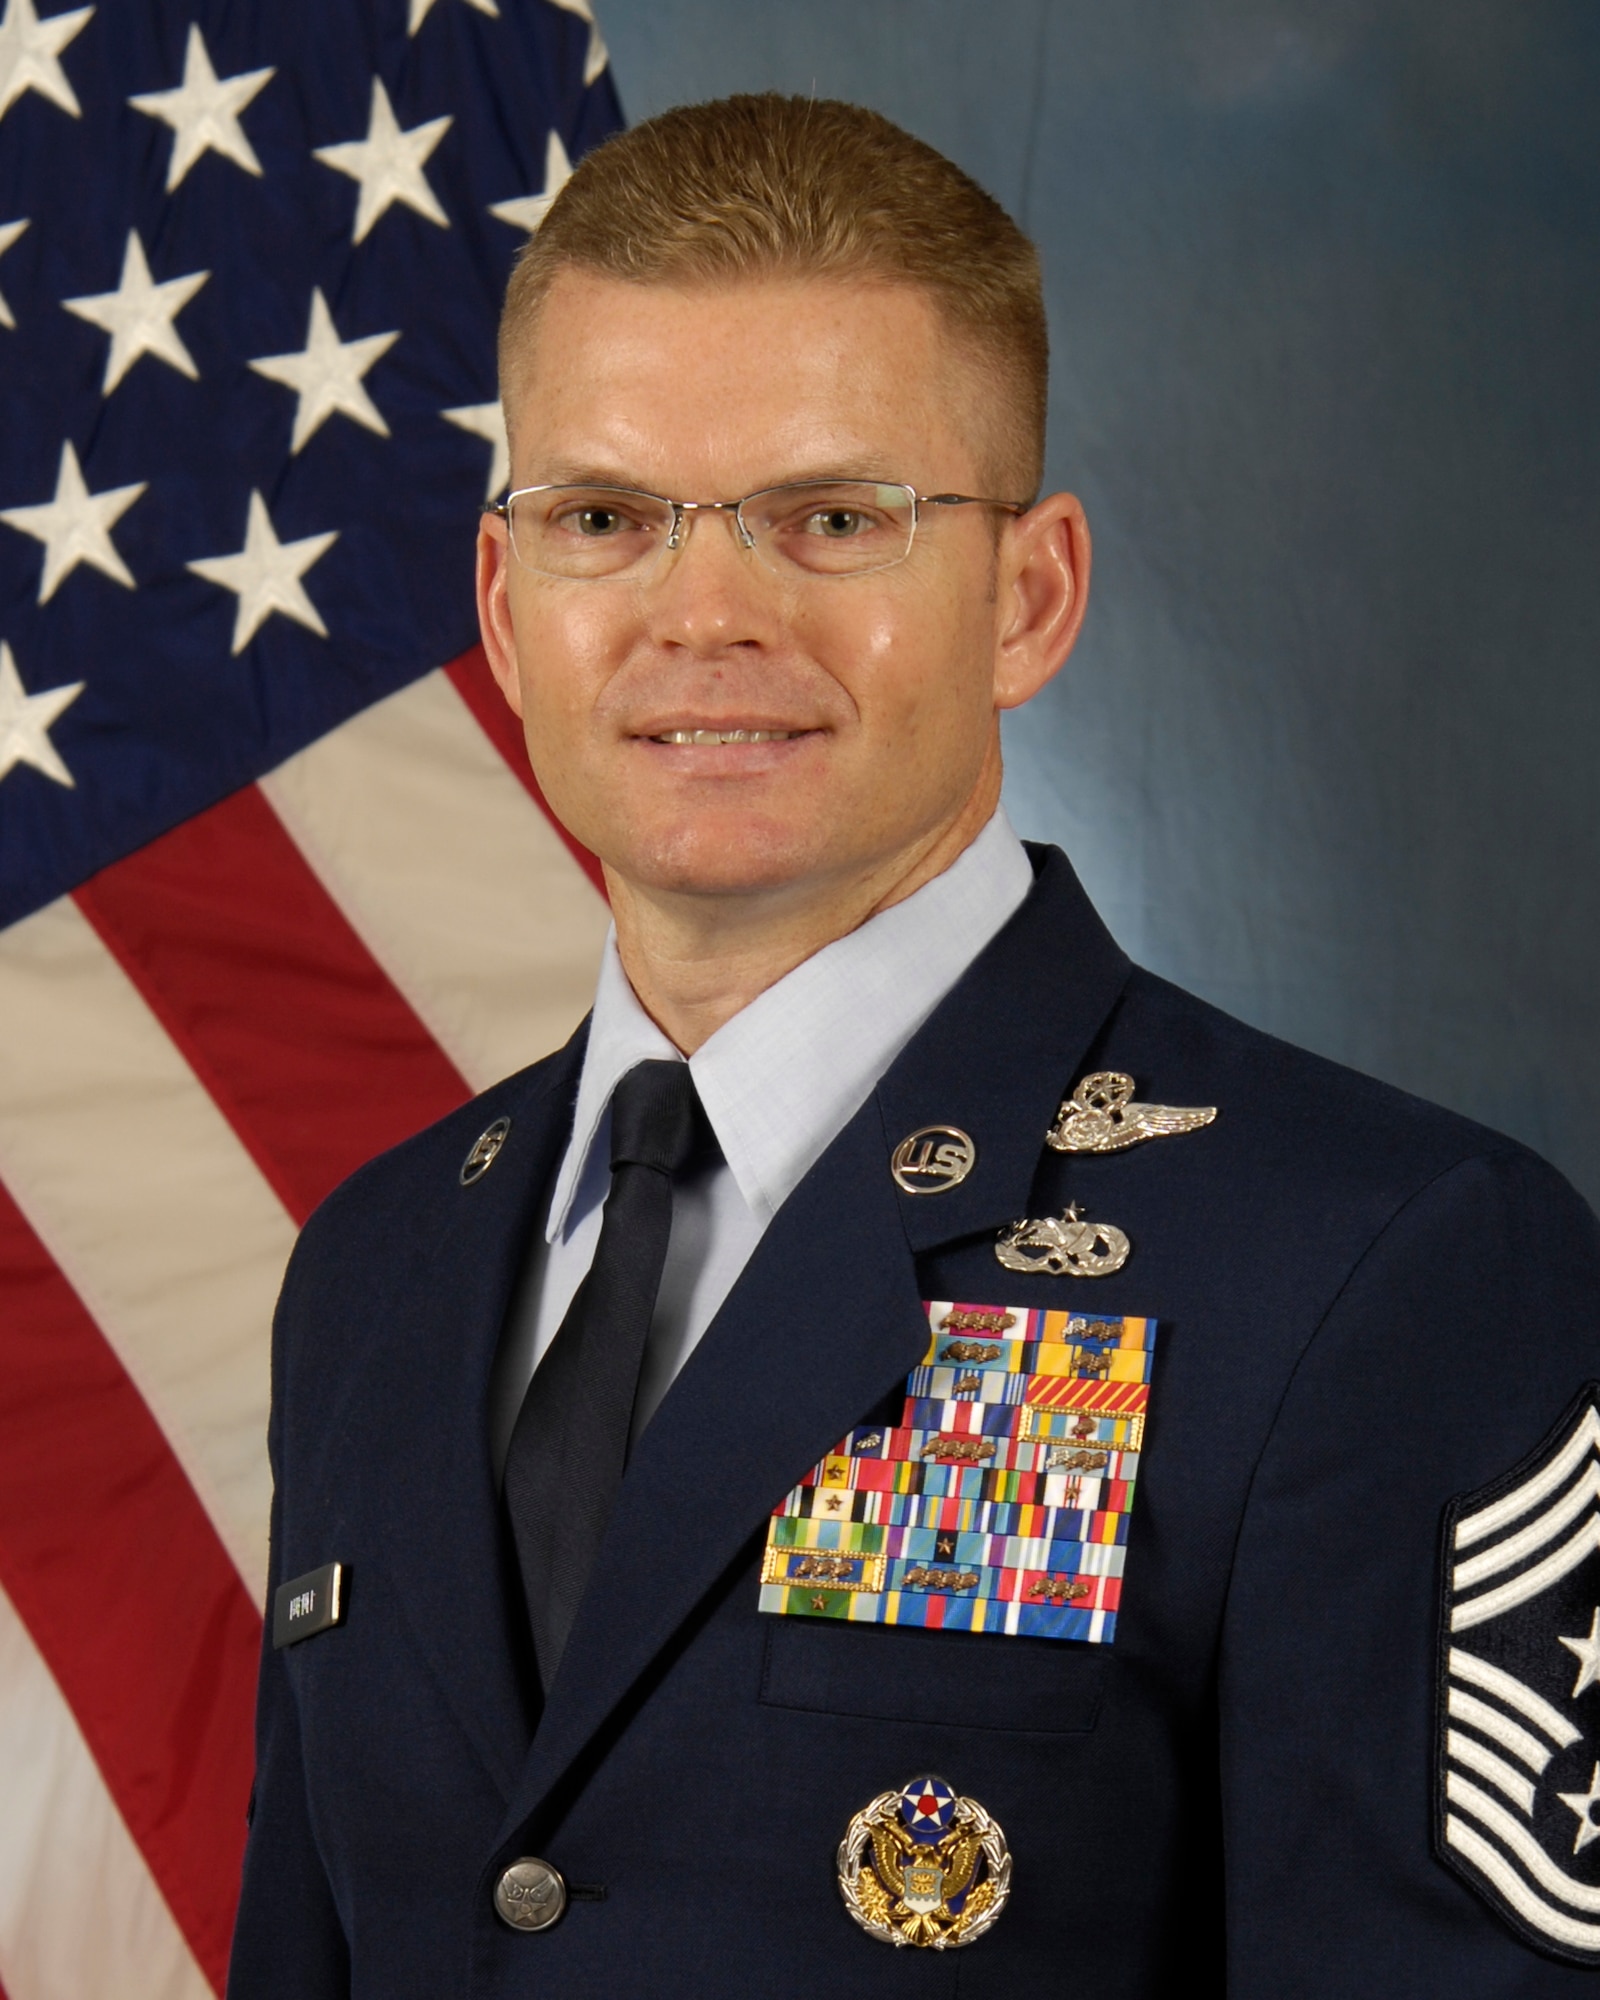 Chief Master Sergeant William W. Turner is the Command Chief Master Sergeant for Air Force Special Operations Command, Hurlburt Field, Fla. 